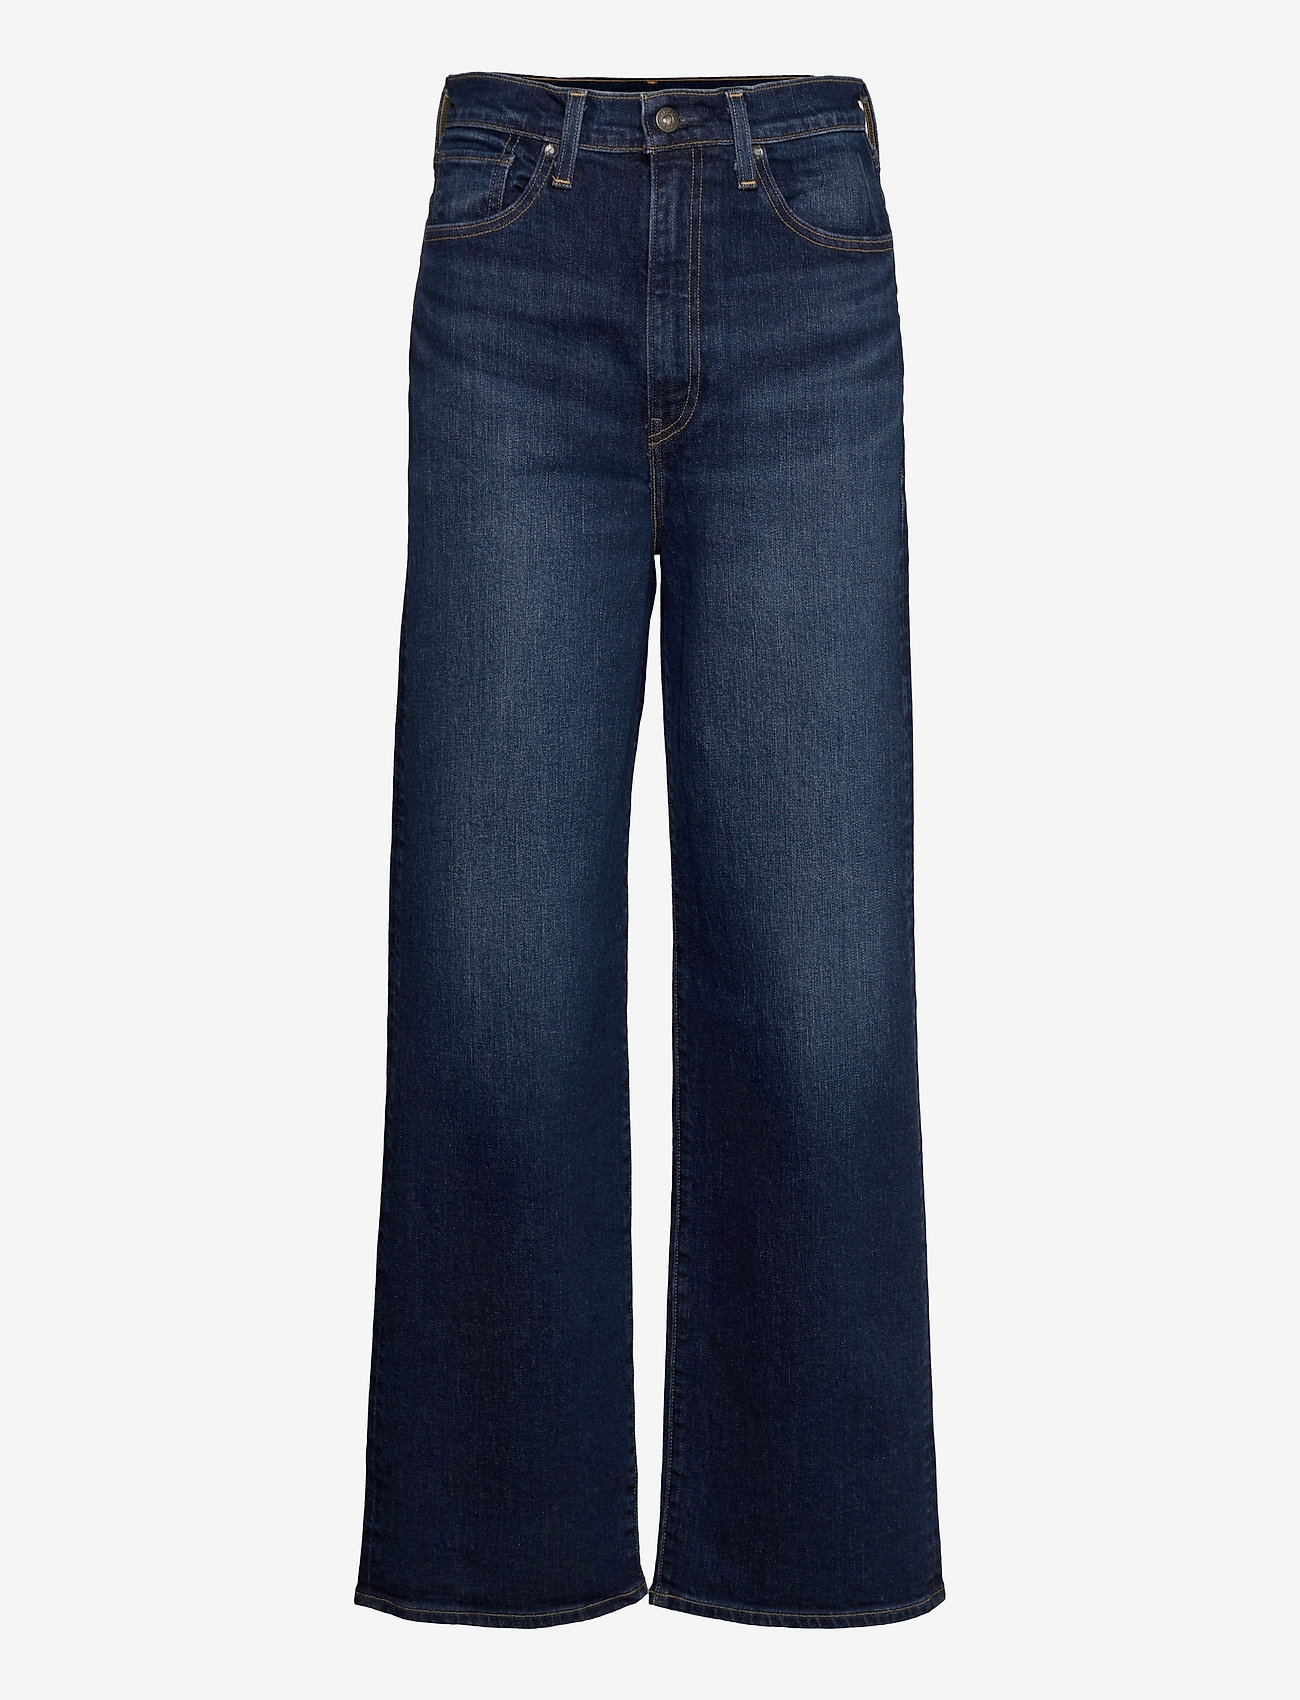 Levi's Made & Crafted - LMC HIGH LOOSE LMC NAMI - brede jeans - dark indigo - worn in - 0